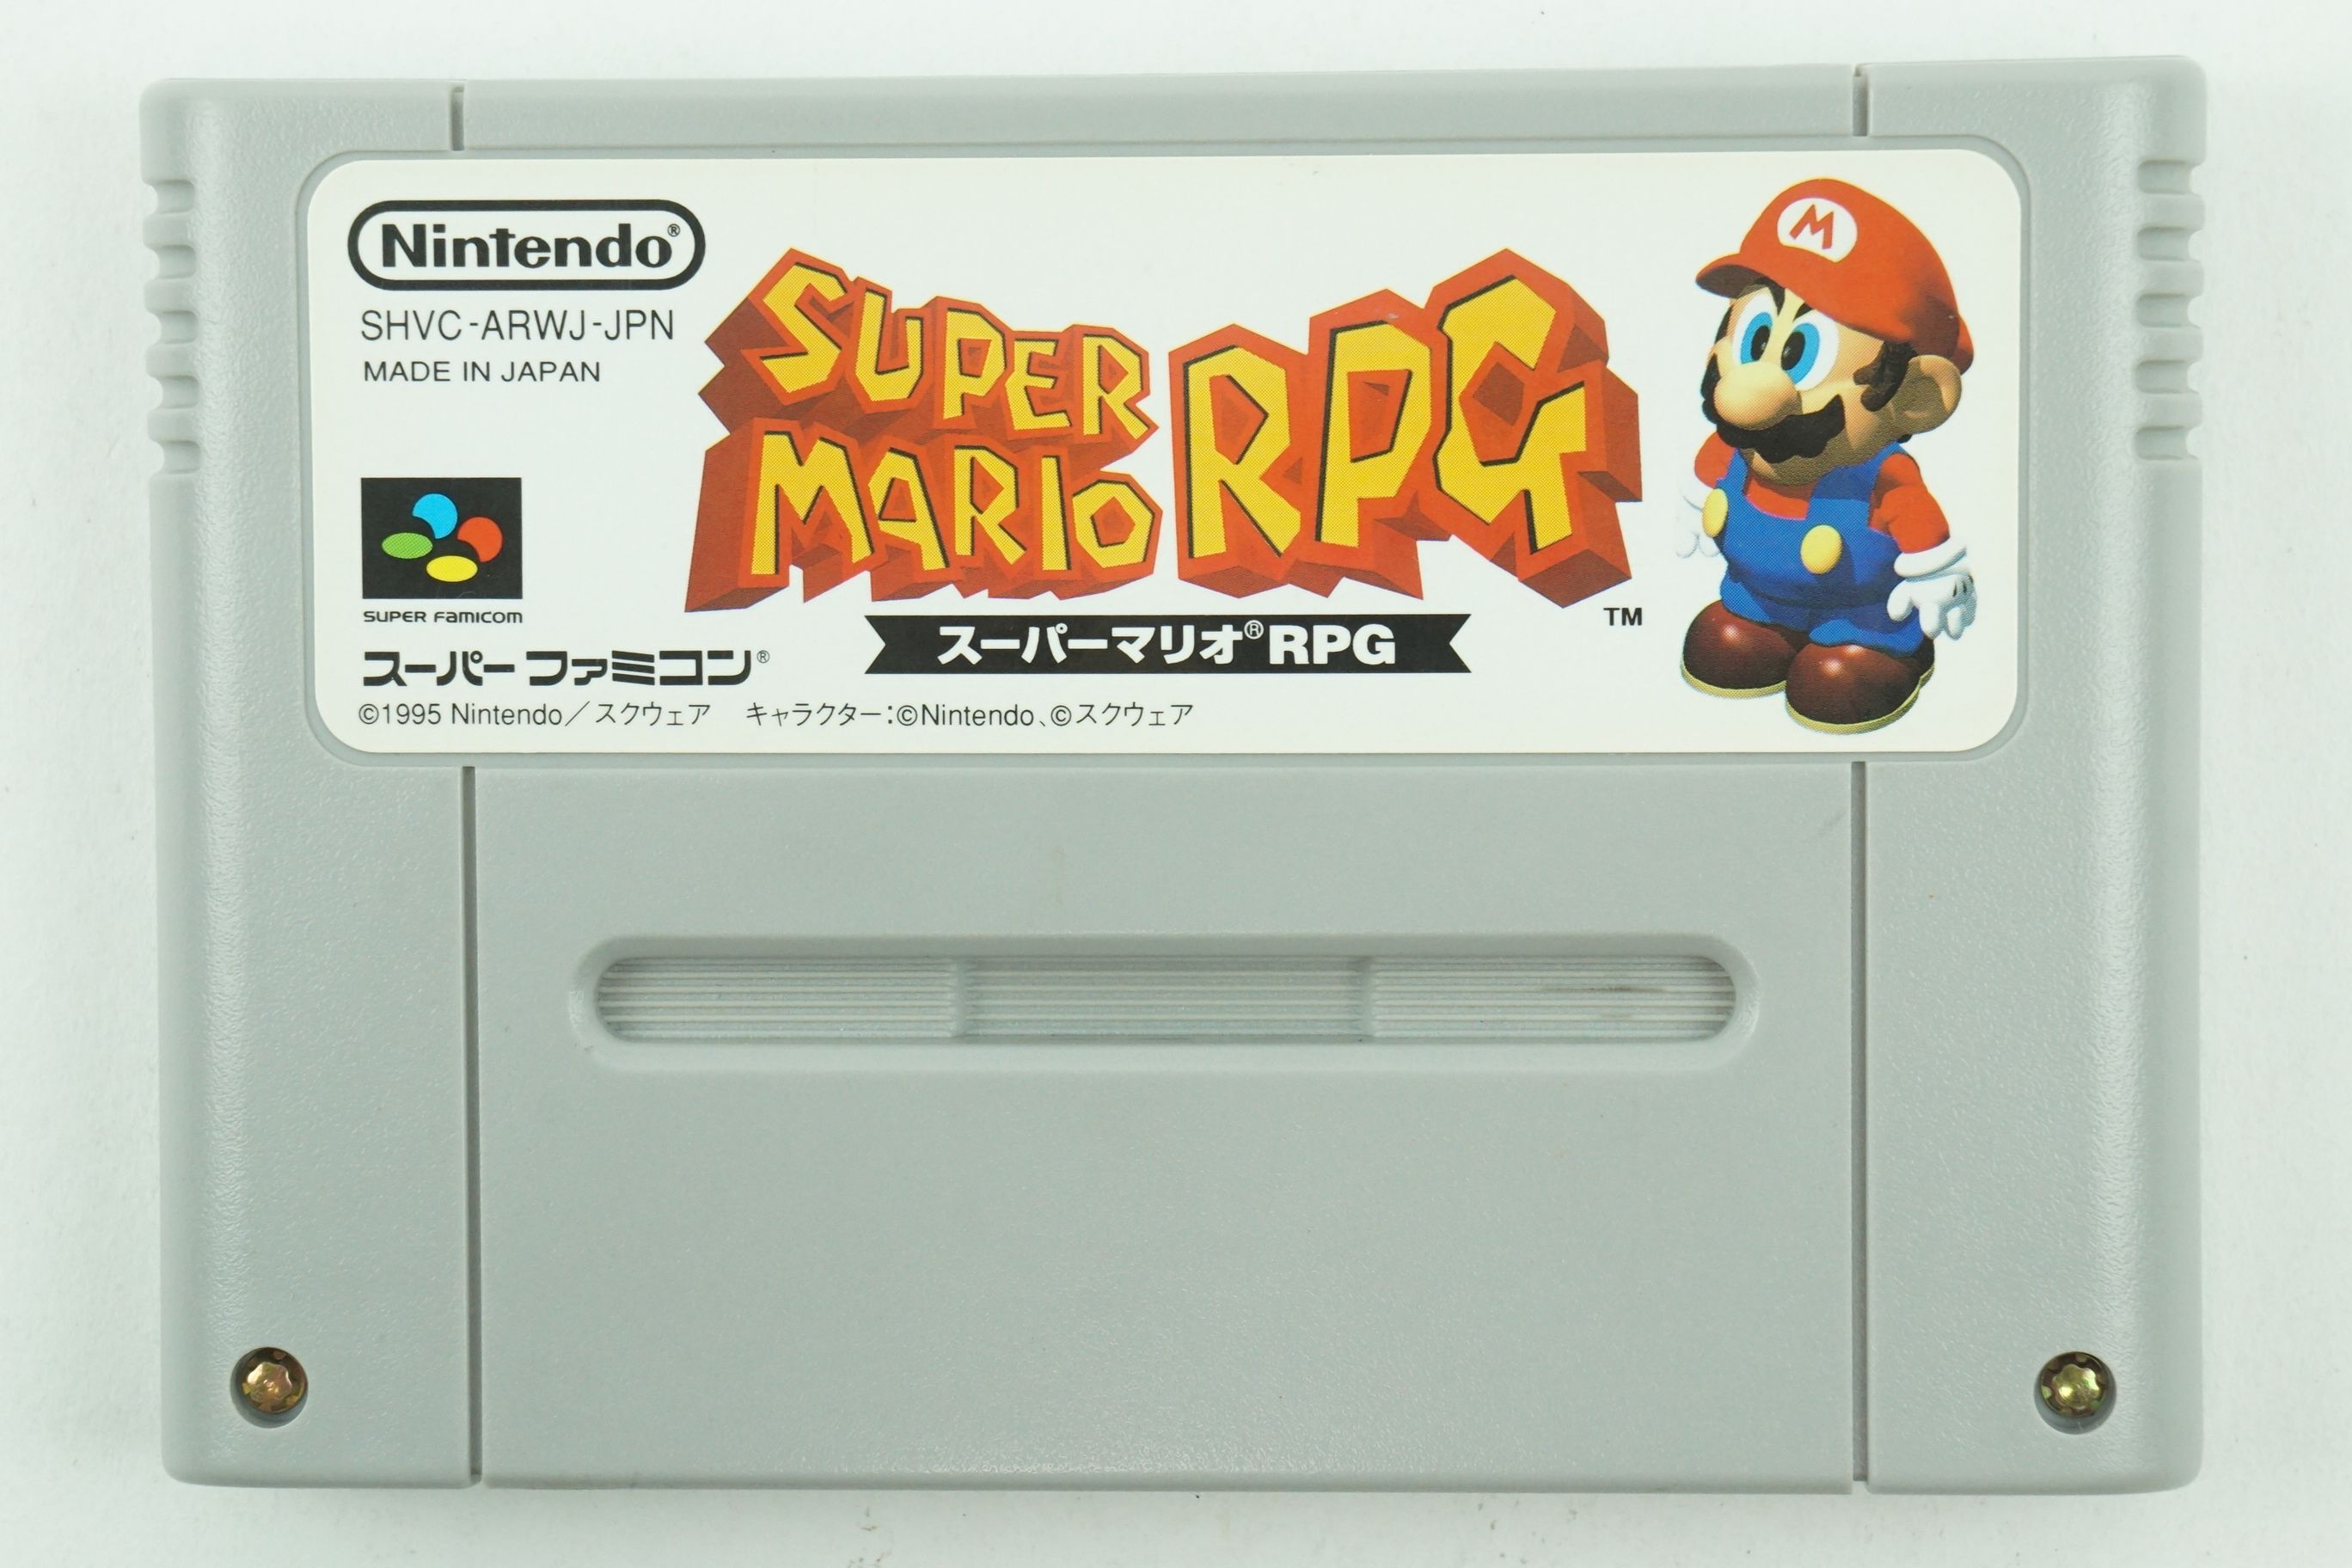 SUPER MARIO RPG SNES Nintendo Super Famicom From Japan 4902370502473 | eBay